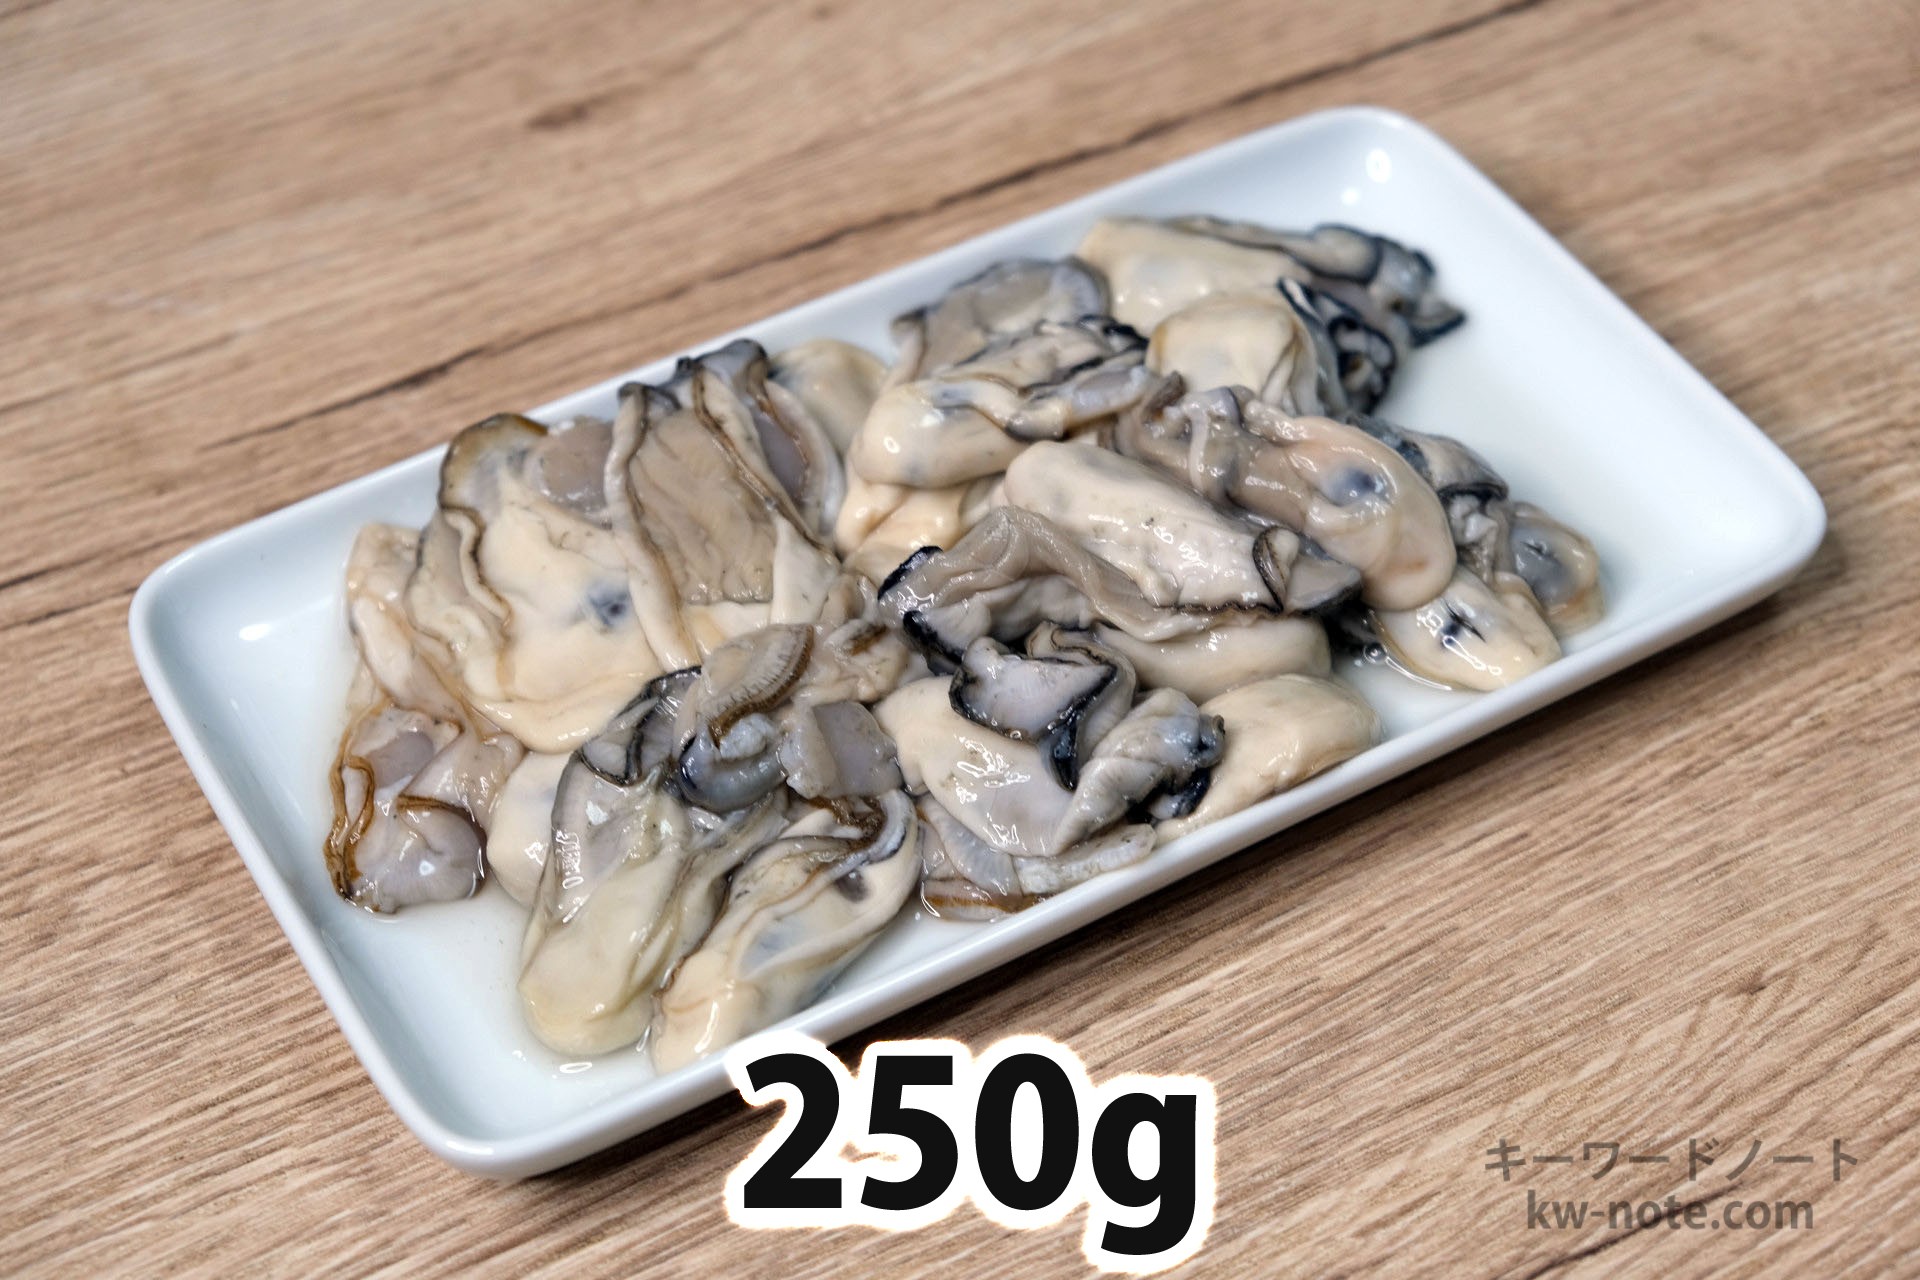 250gの牡蠣